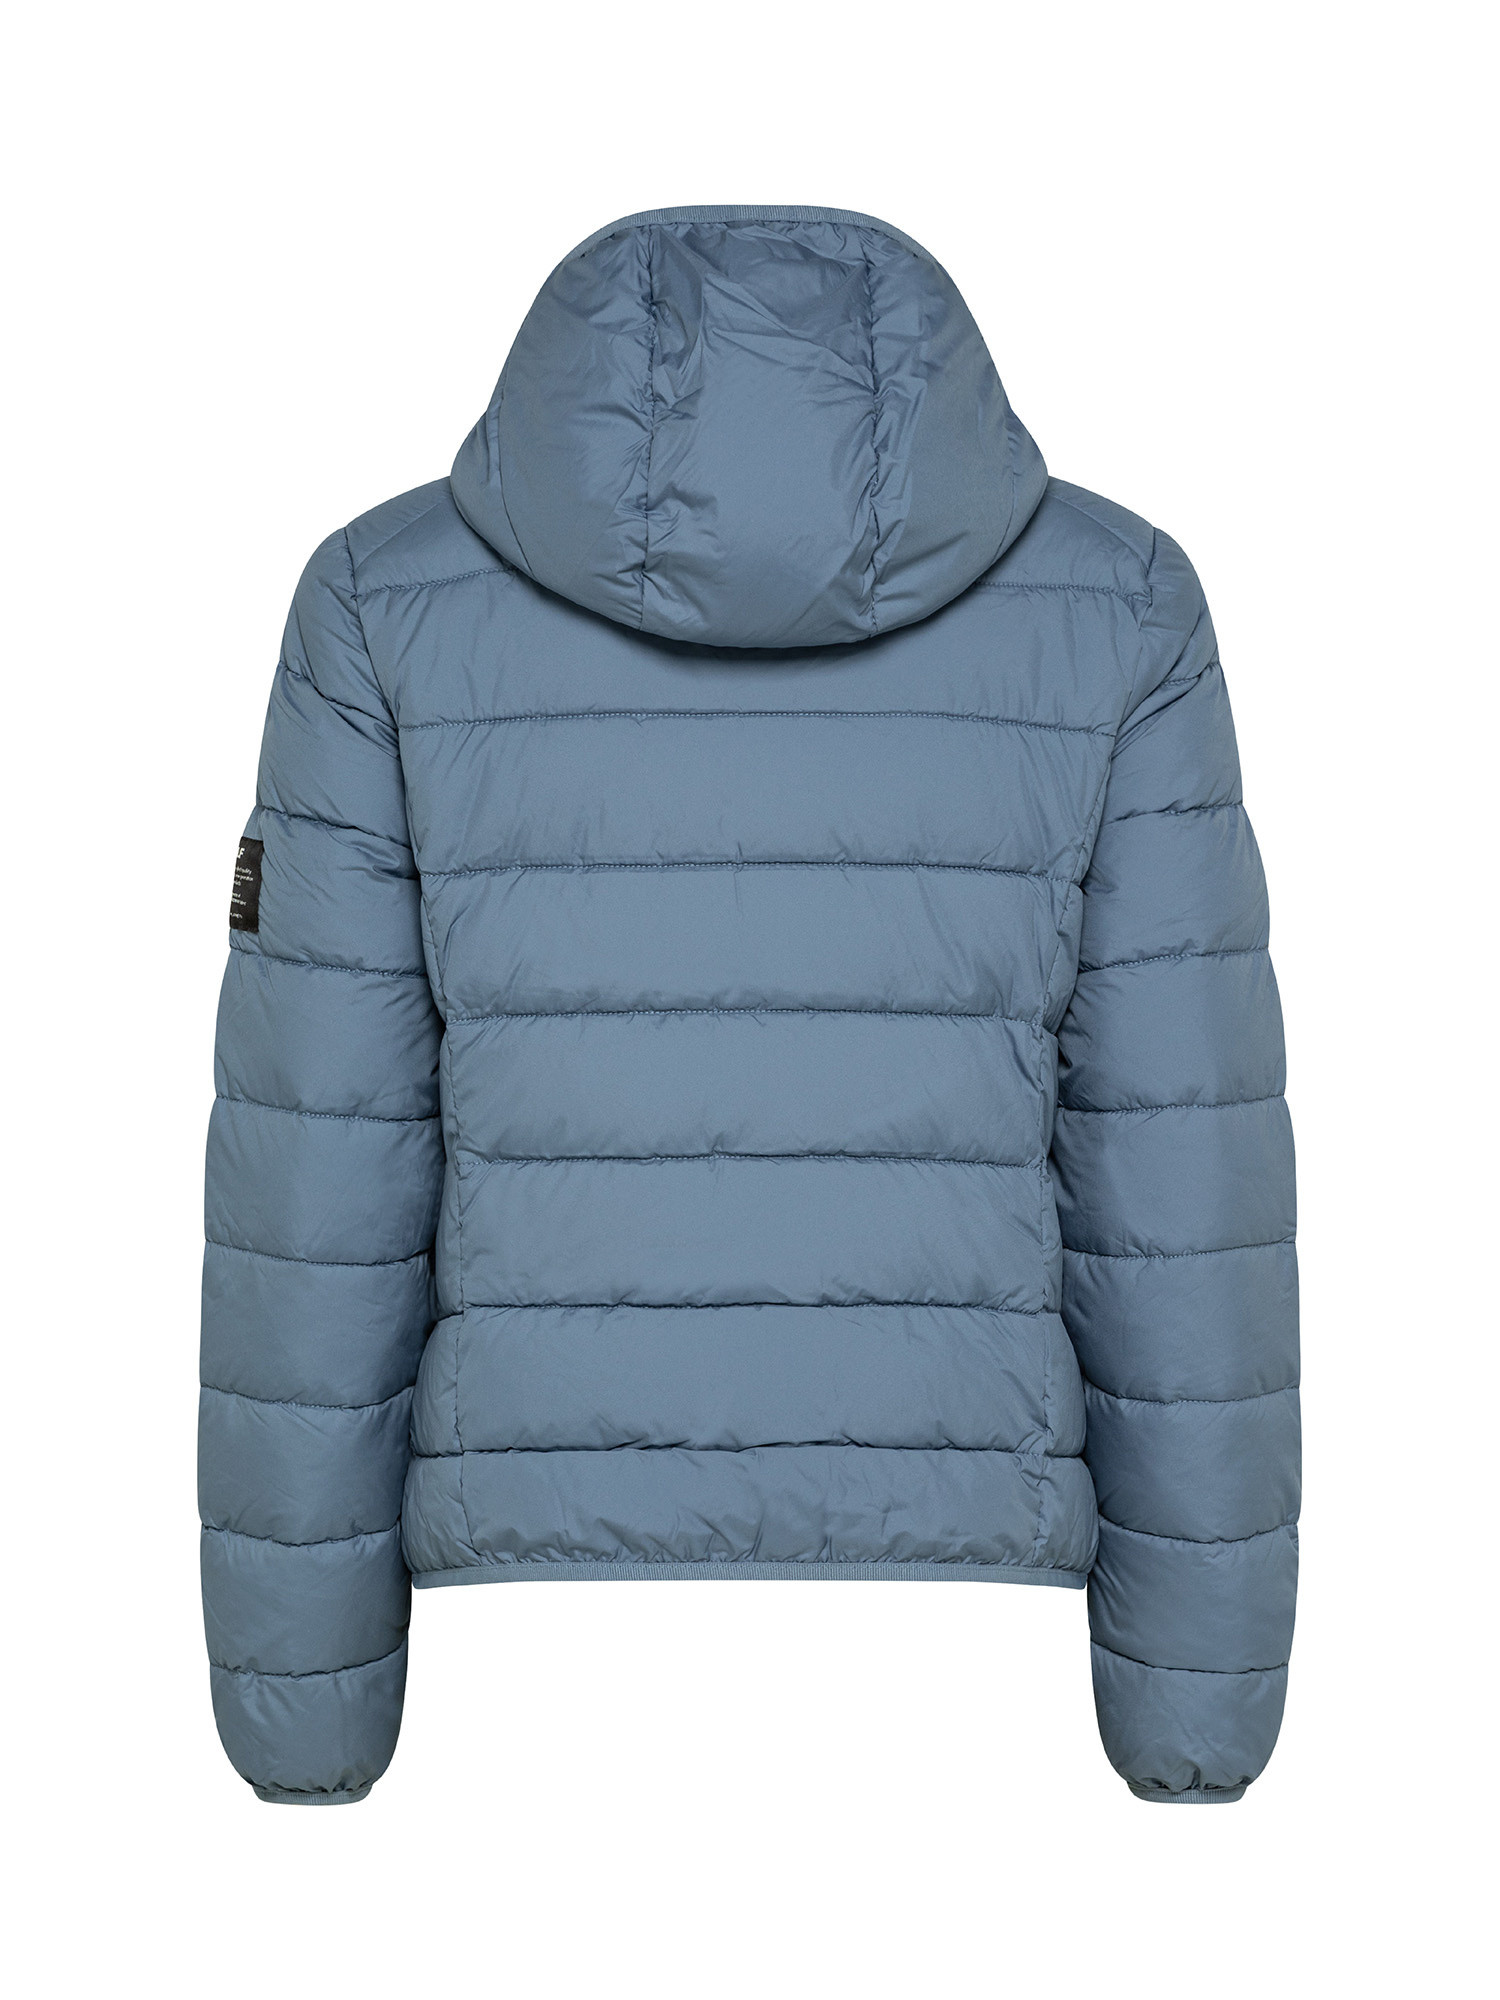 Ecoalf - Waterproof Asp down jacket with logo, Blue Dark, large image number 1